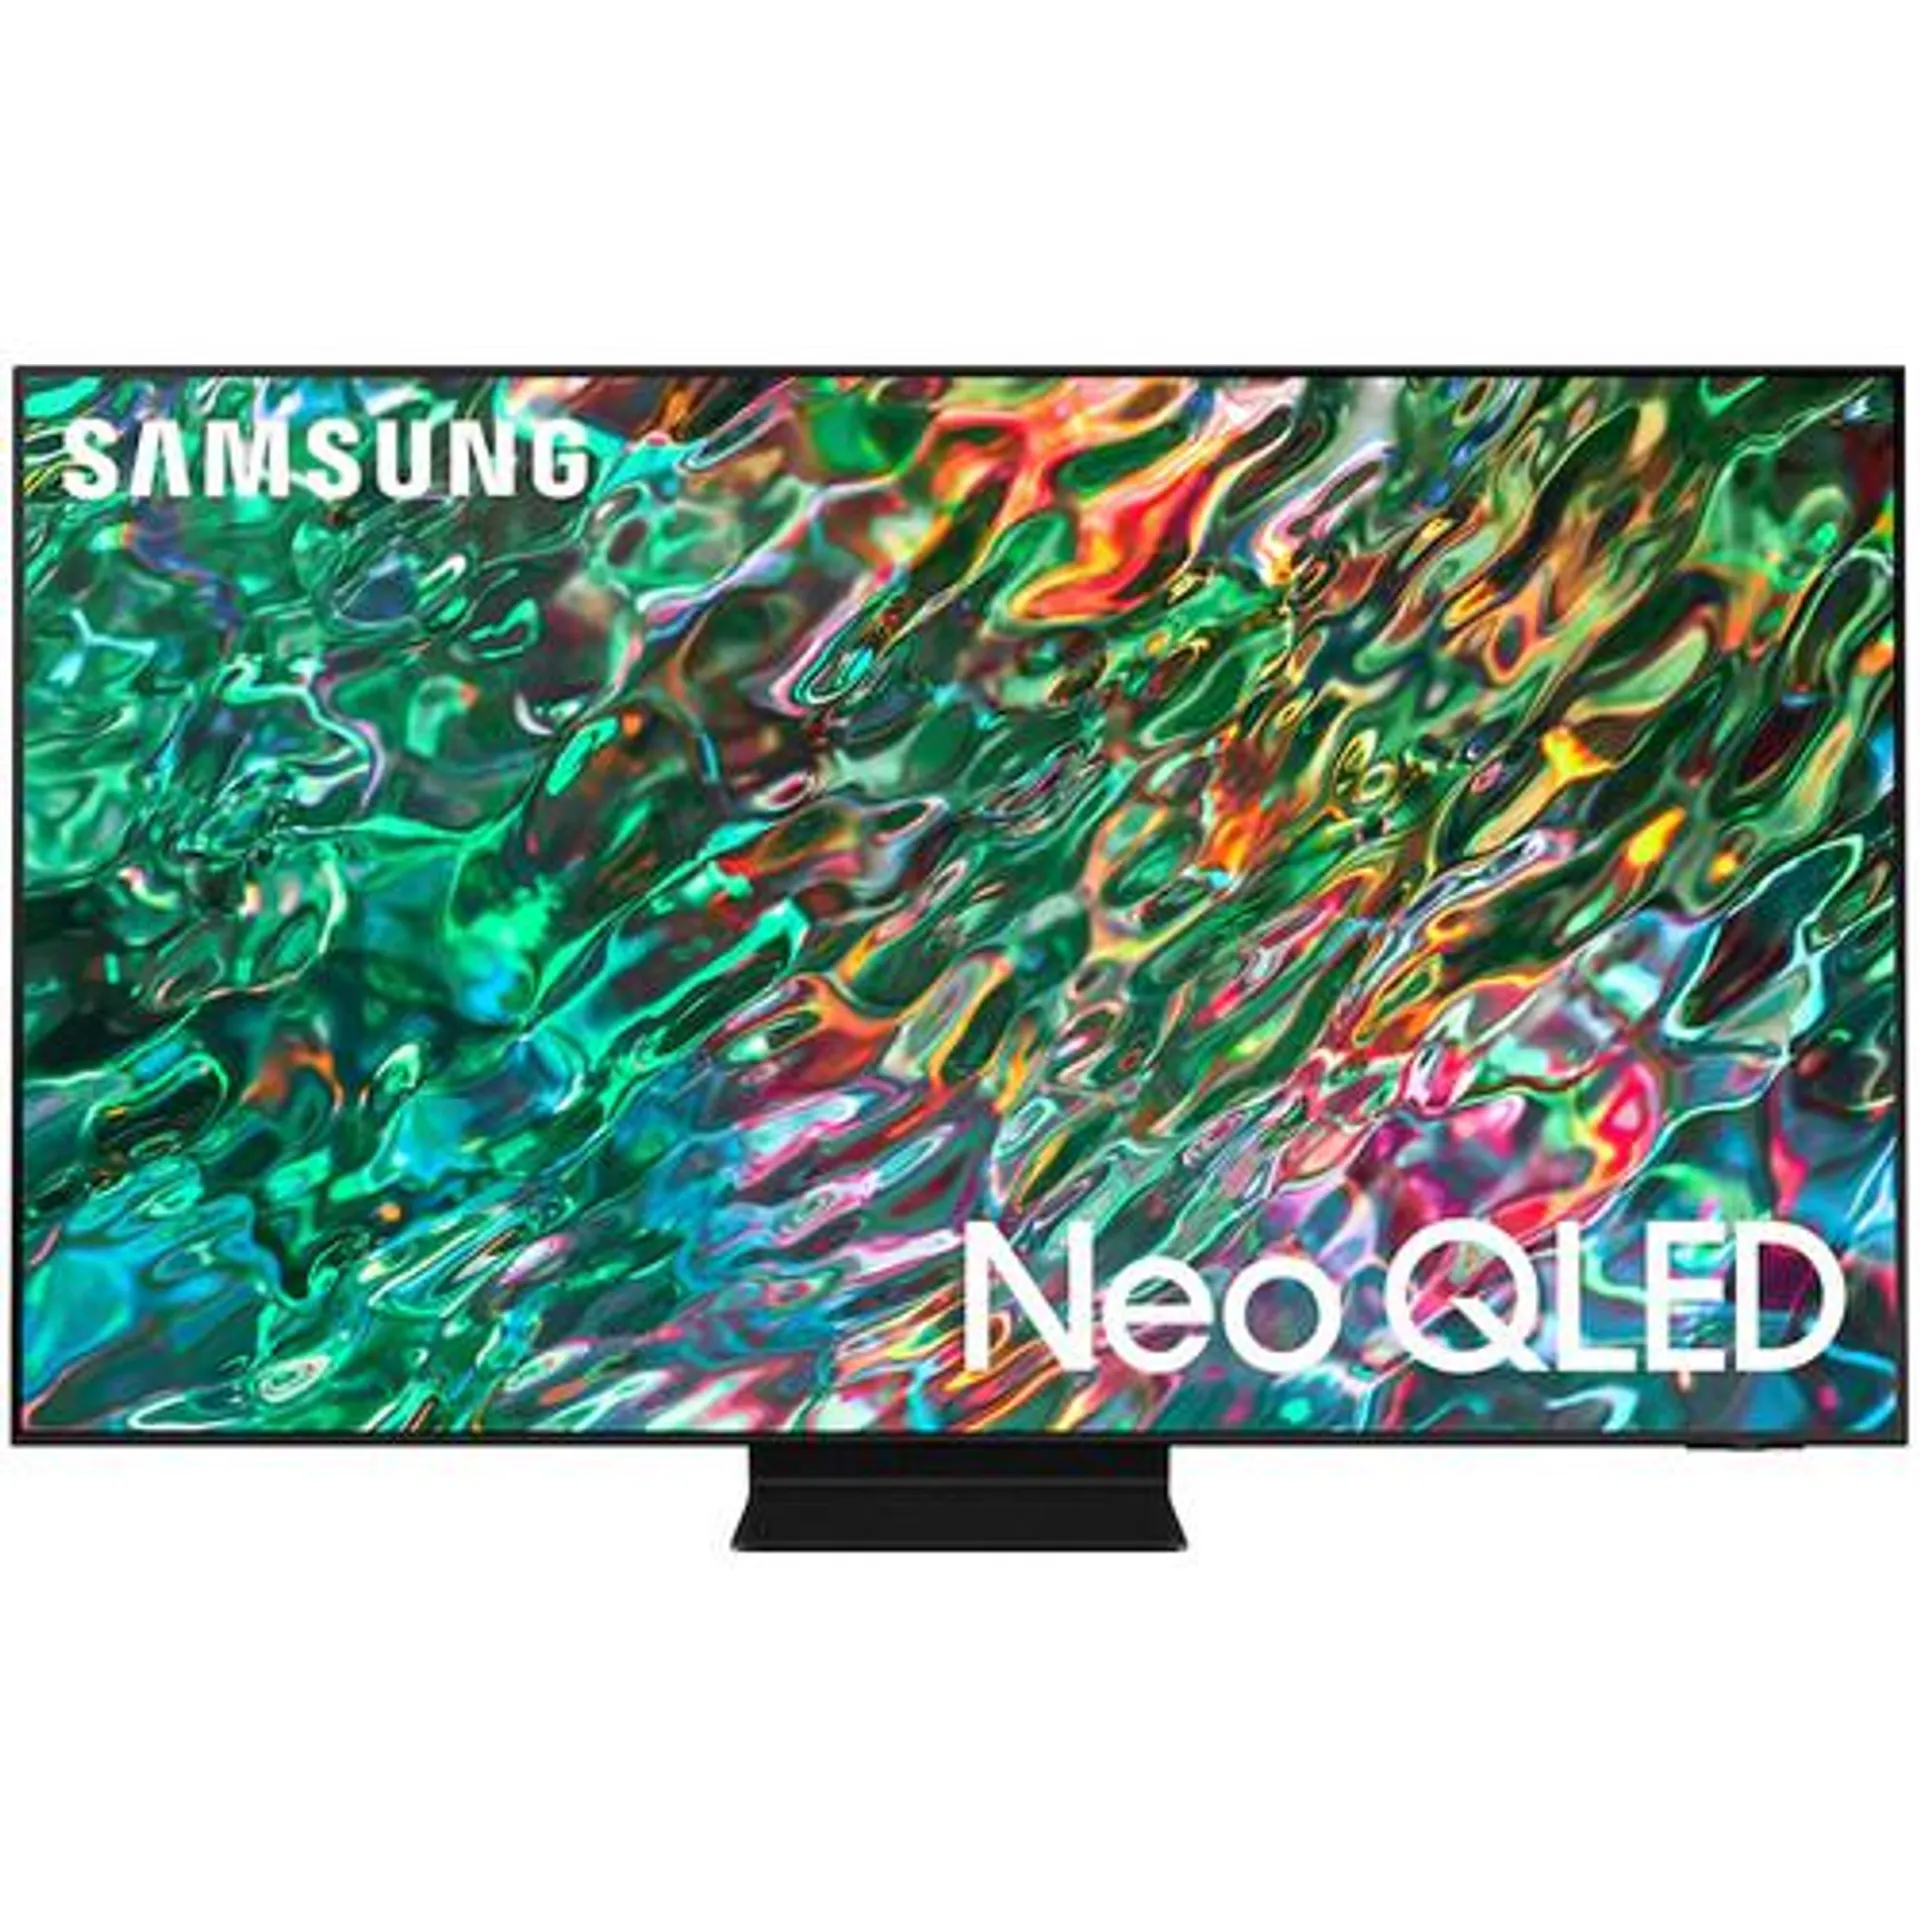 Samsung Neo QLED QN90B 55" 4K HDR Smart QLED TV